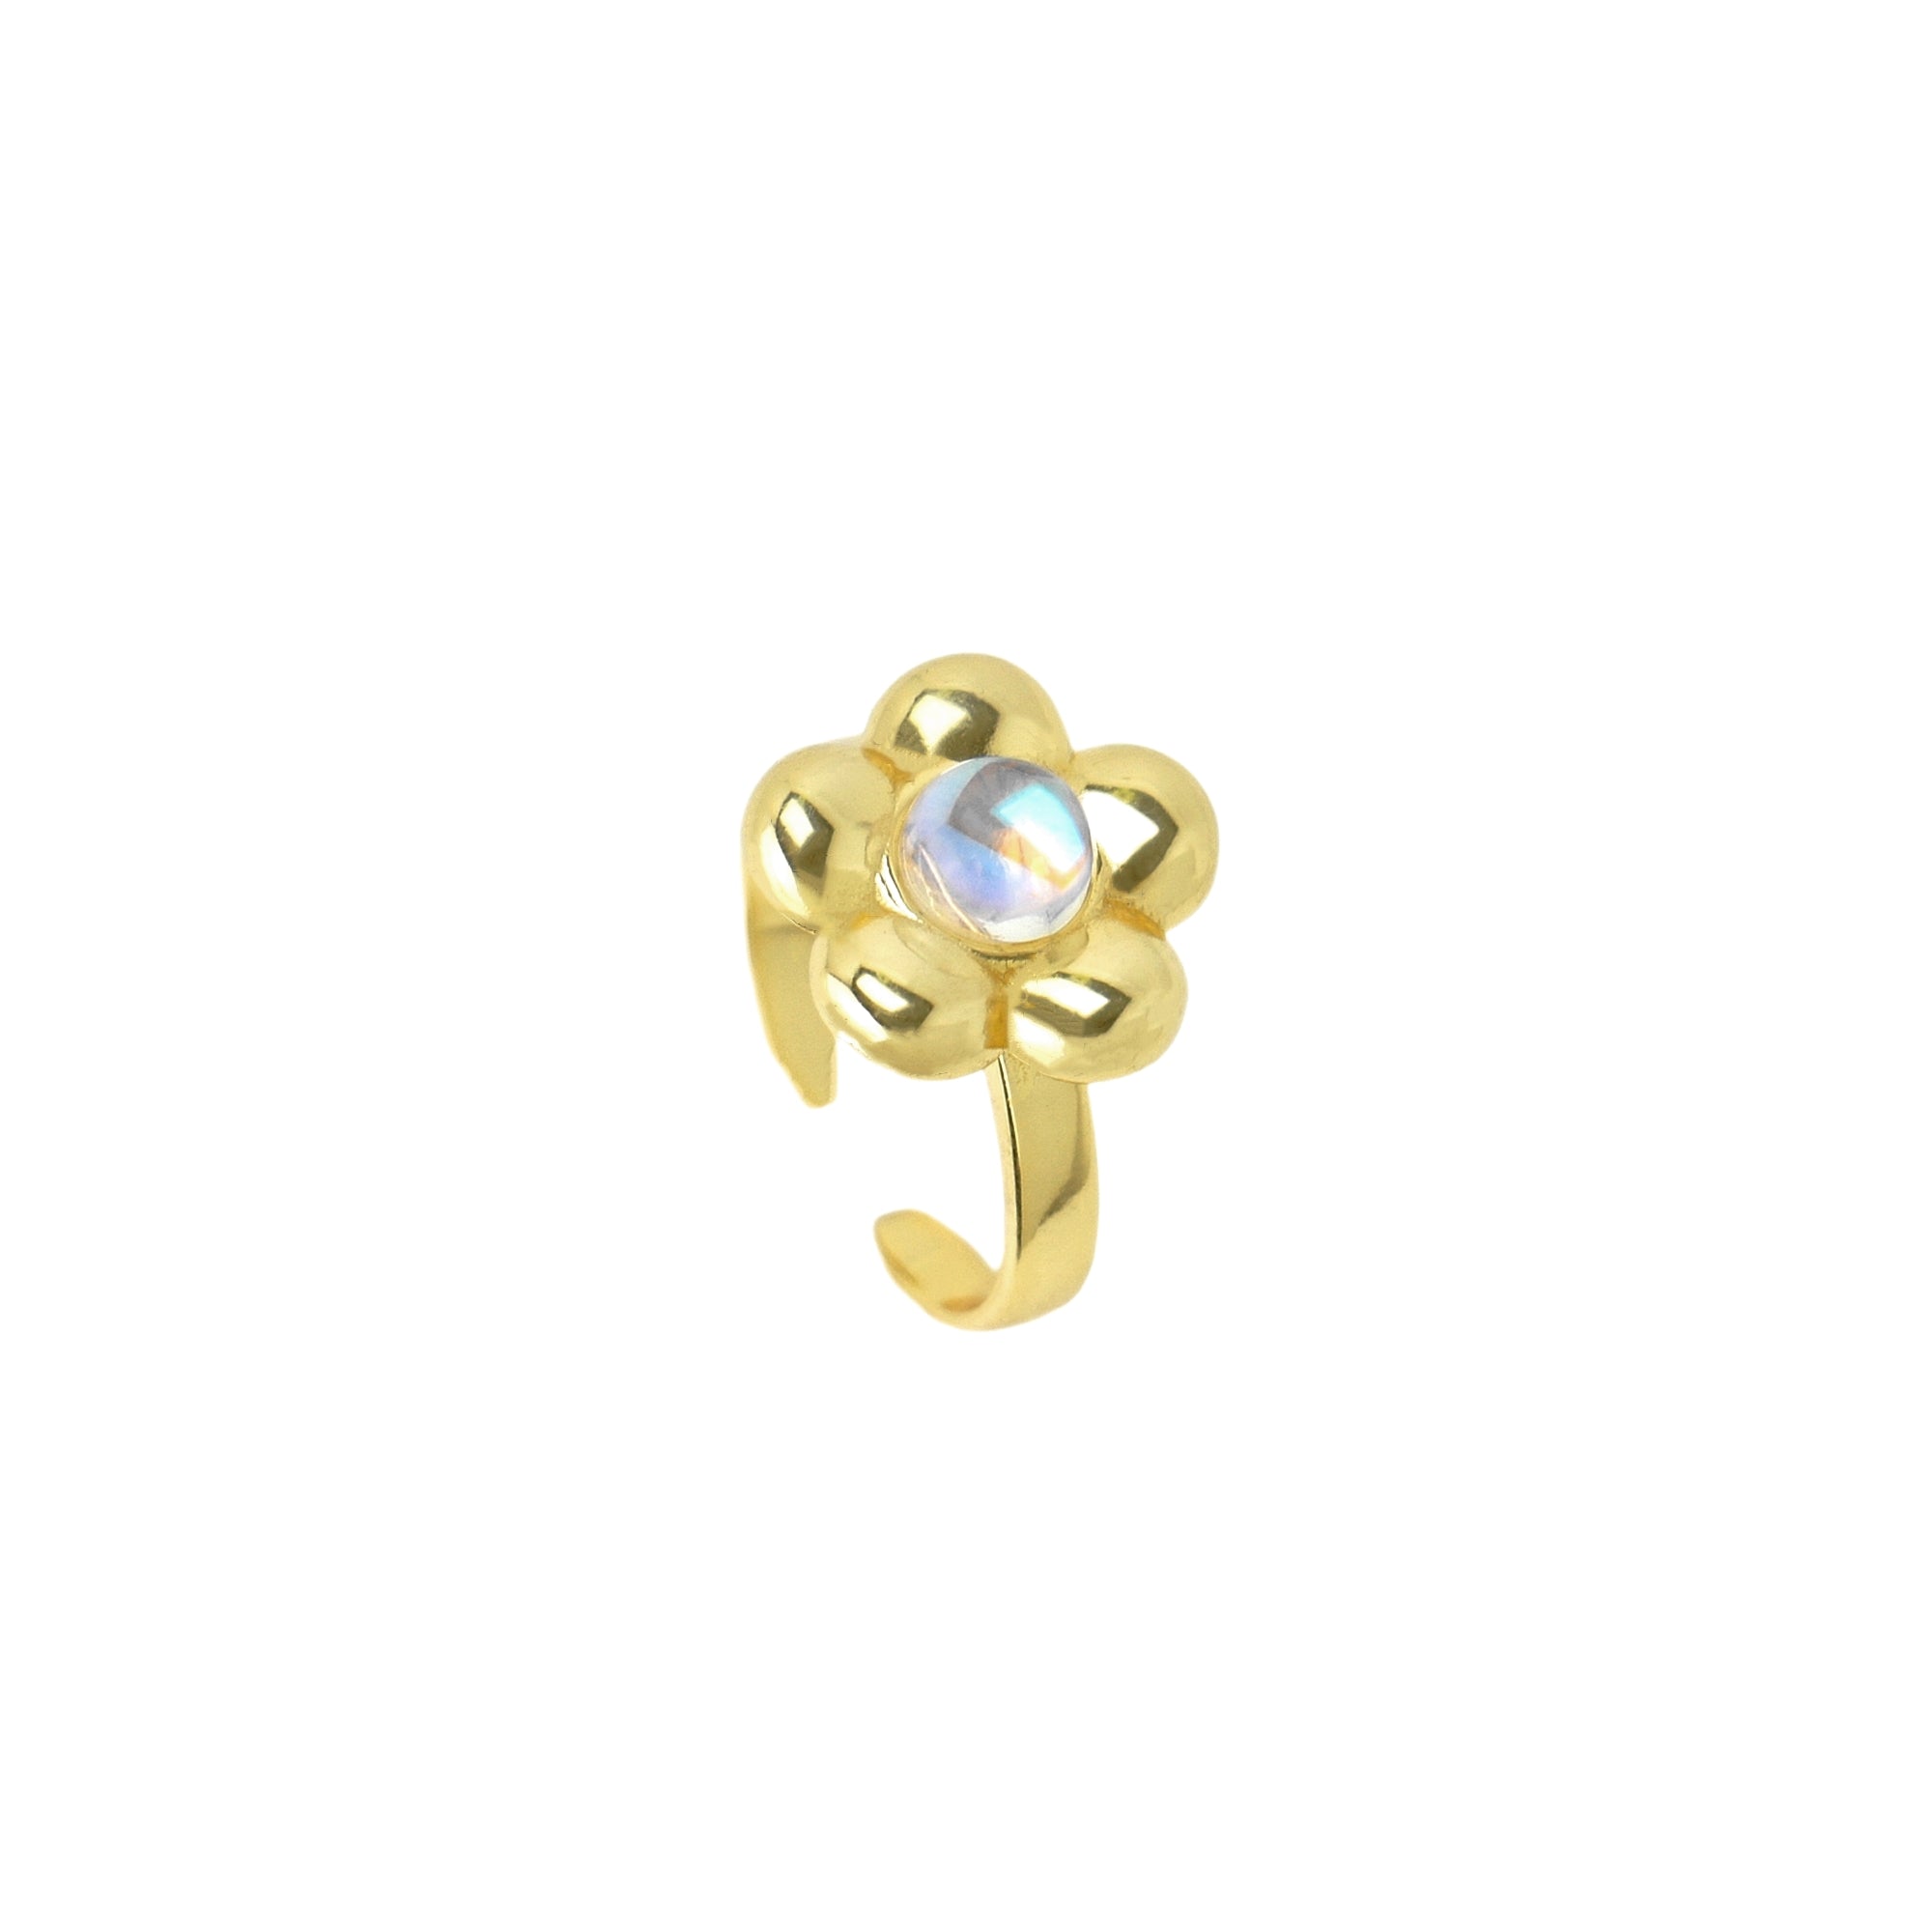 Flower Power Ring, Gold Vermeil/Sterling Silver